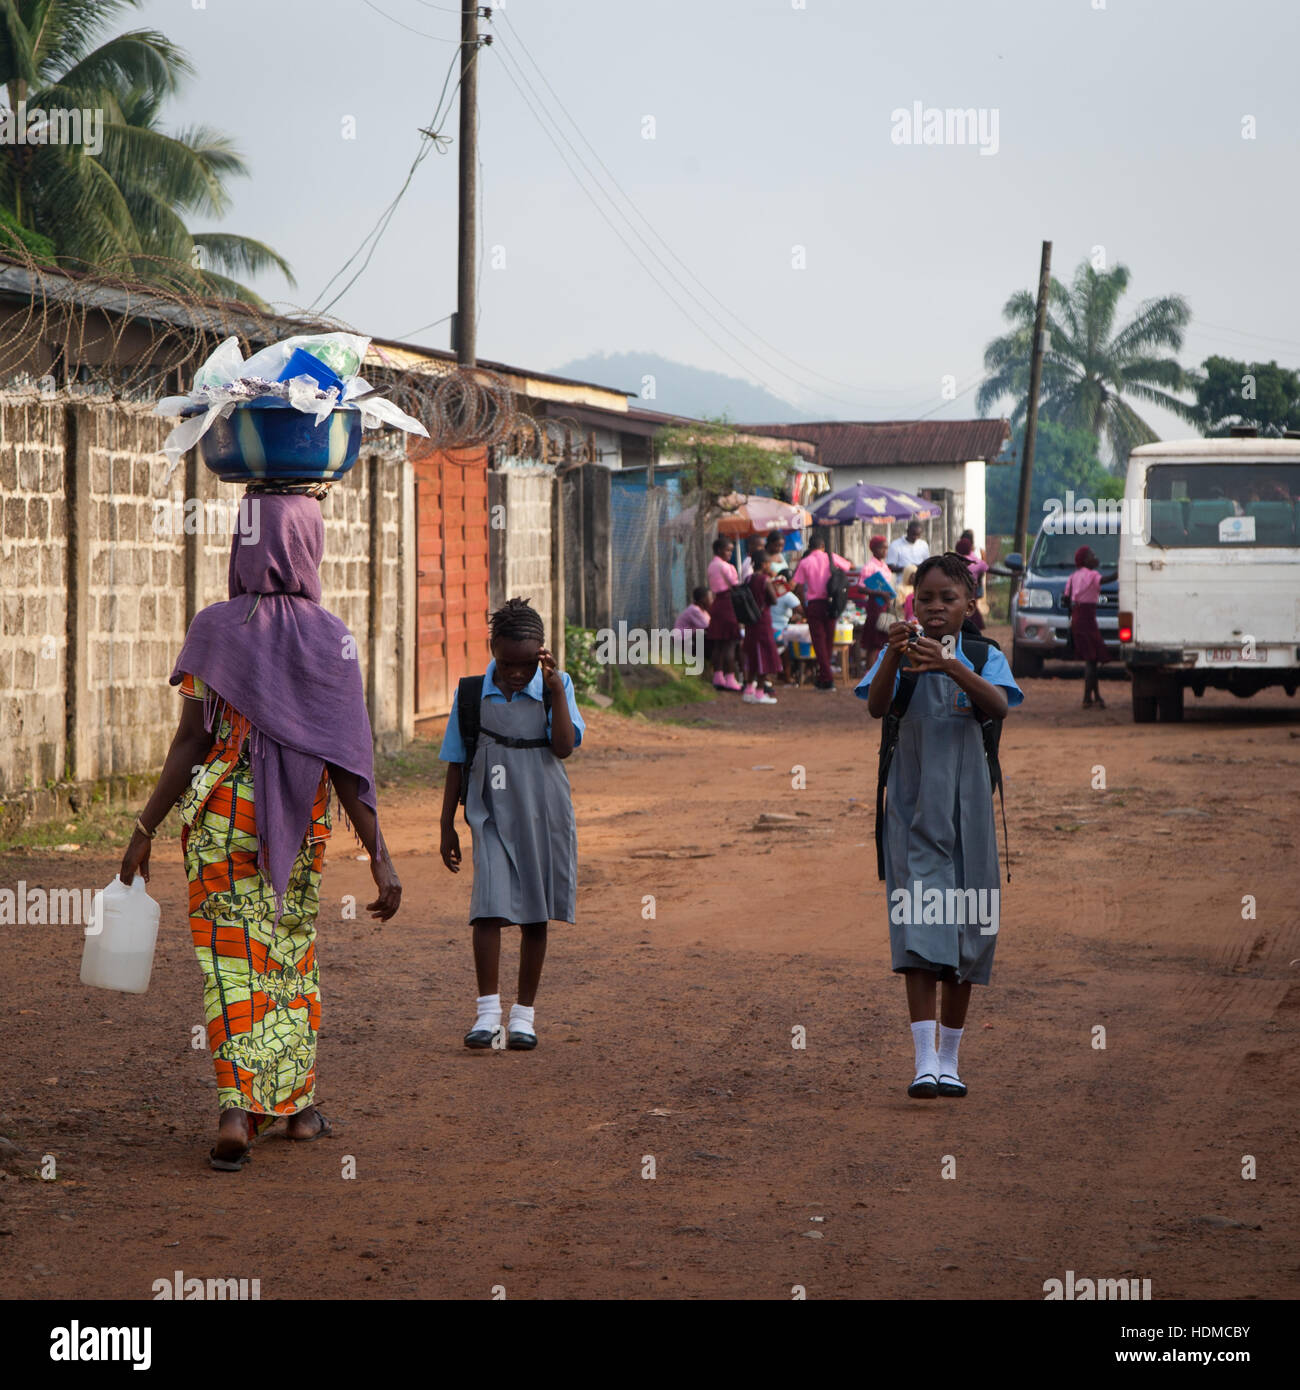 Woman and students in school uniform in the street of Kenema, Sierra Leone Stock Photo